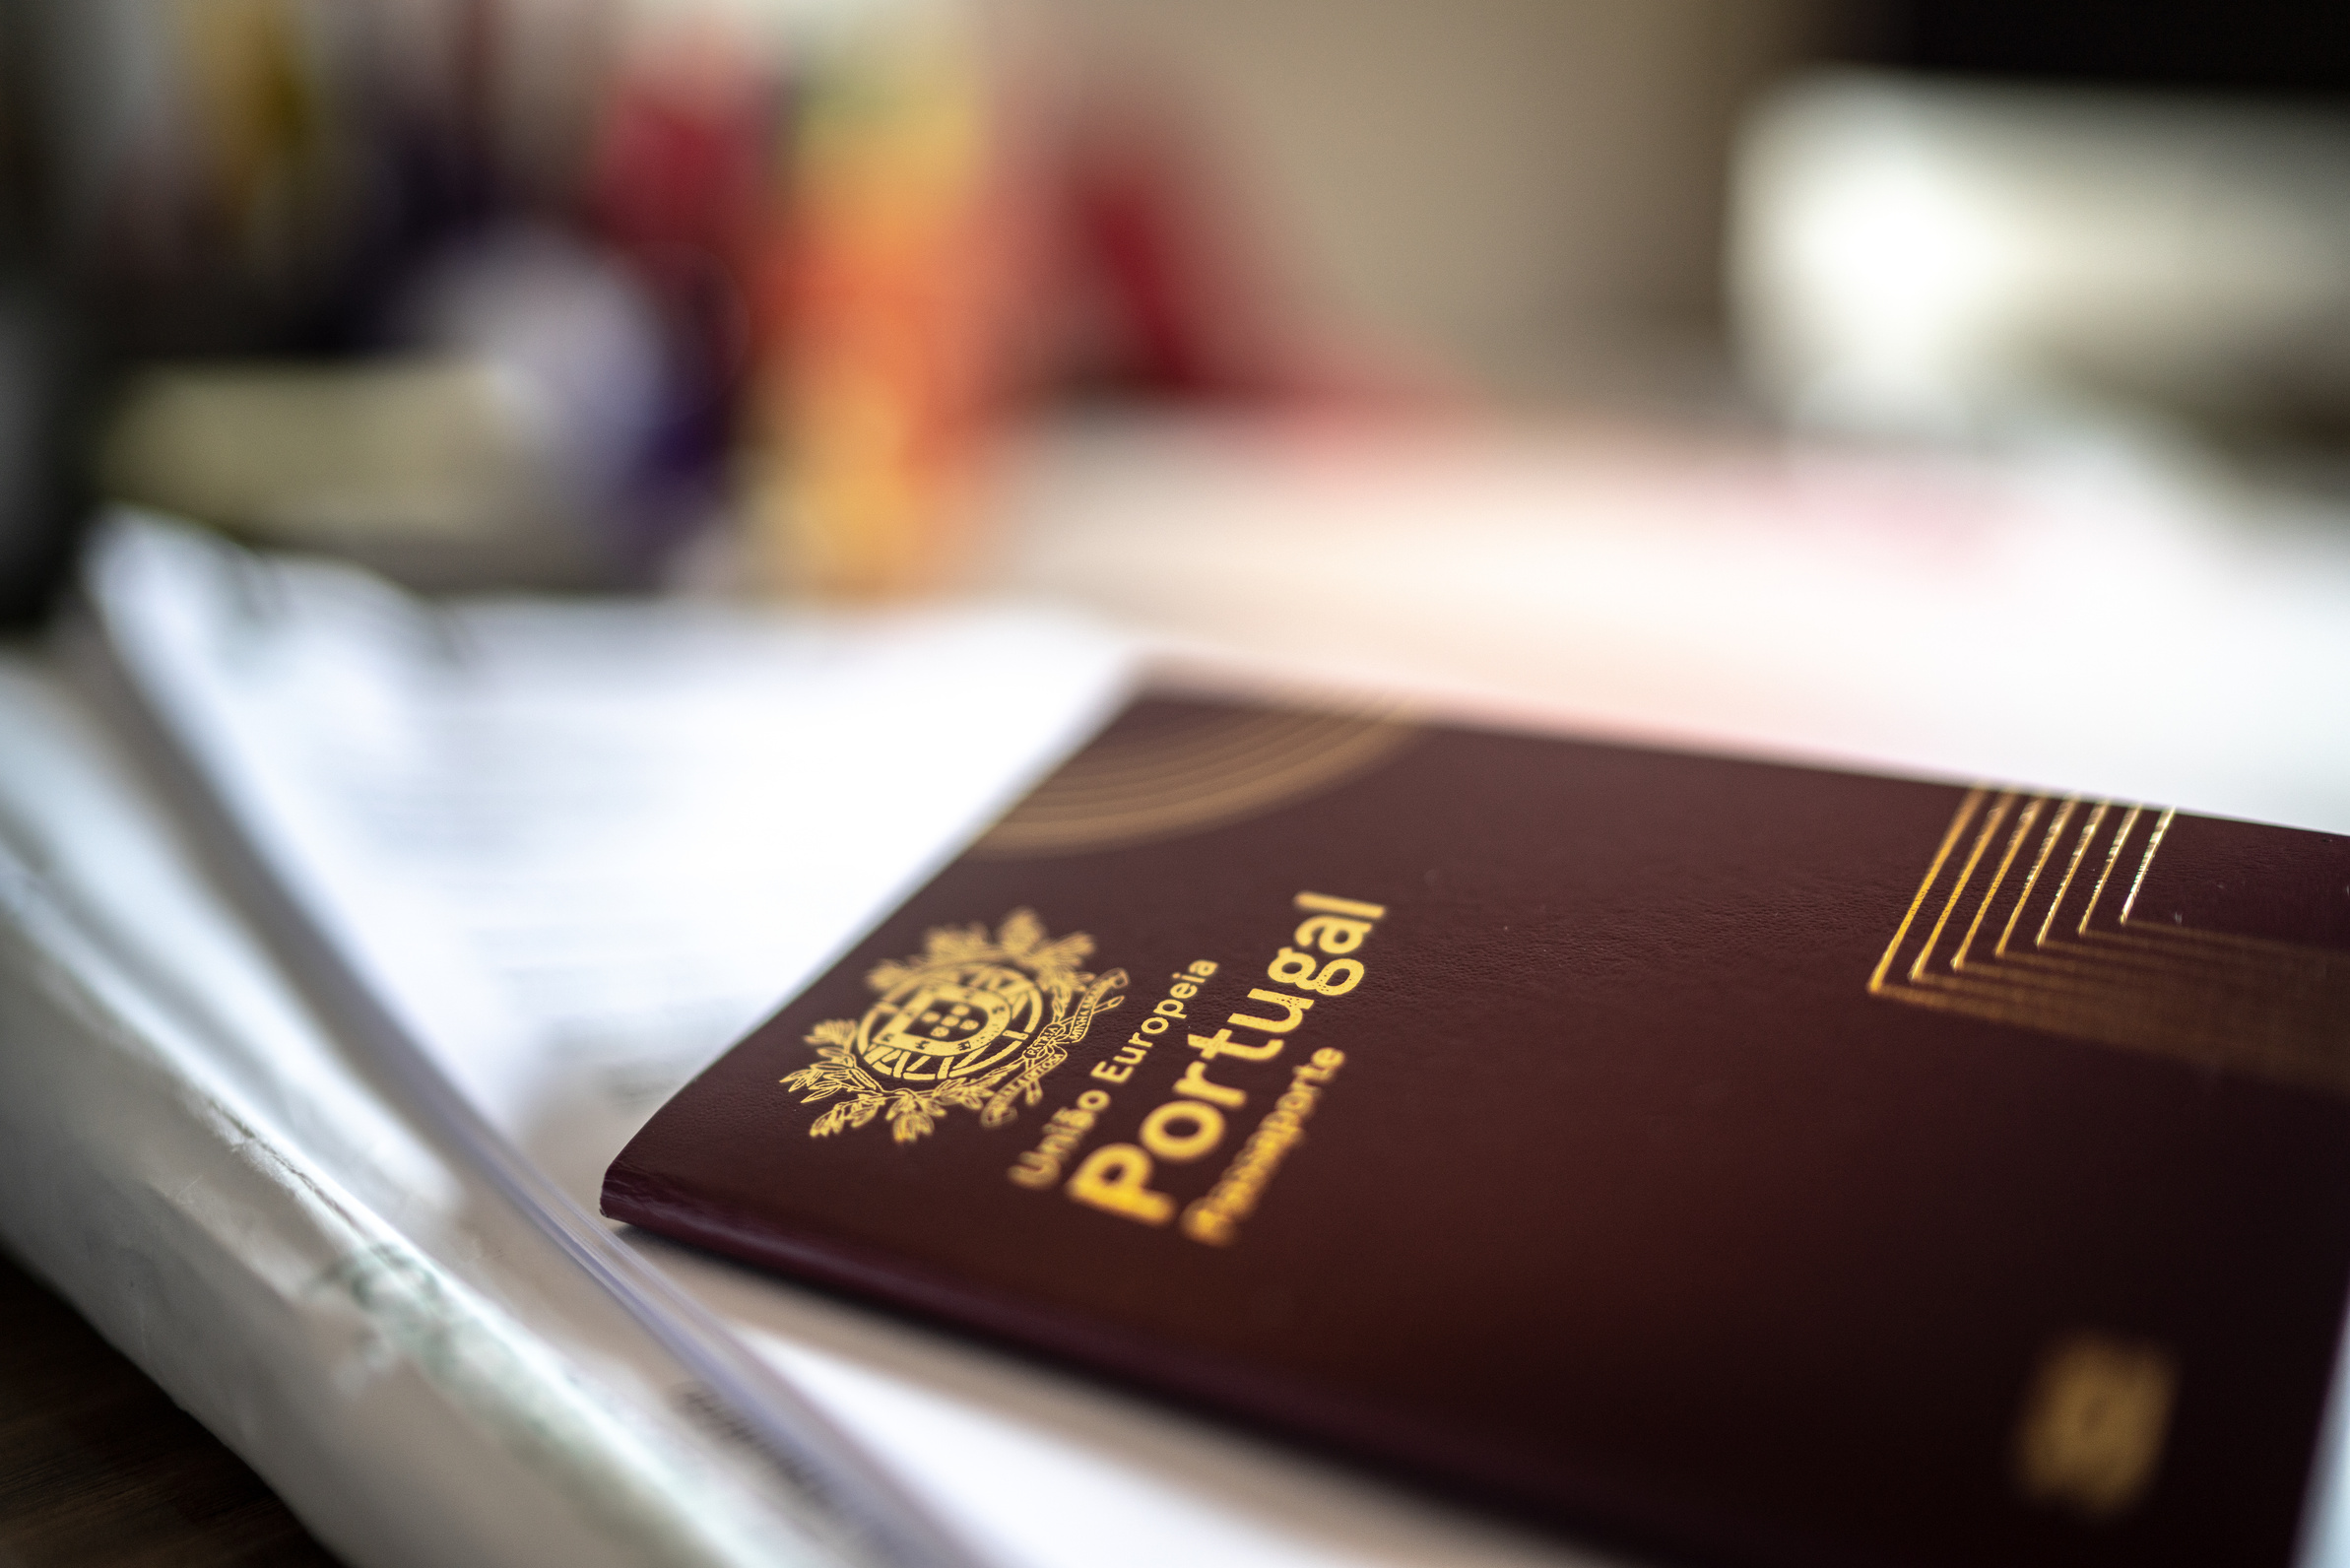 Portuguese passport at desk